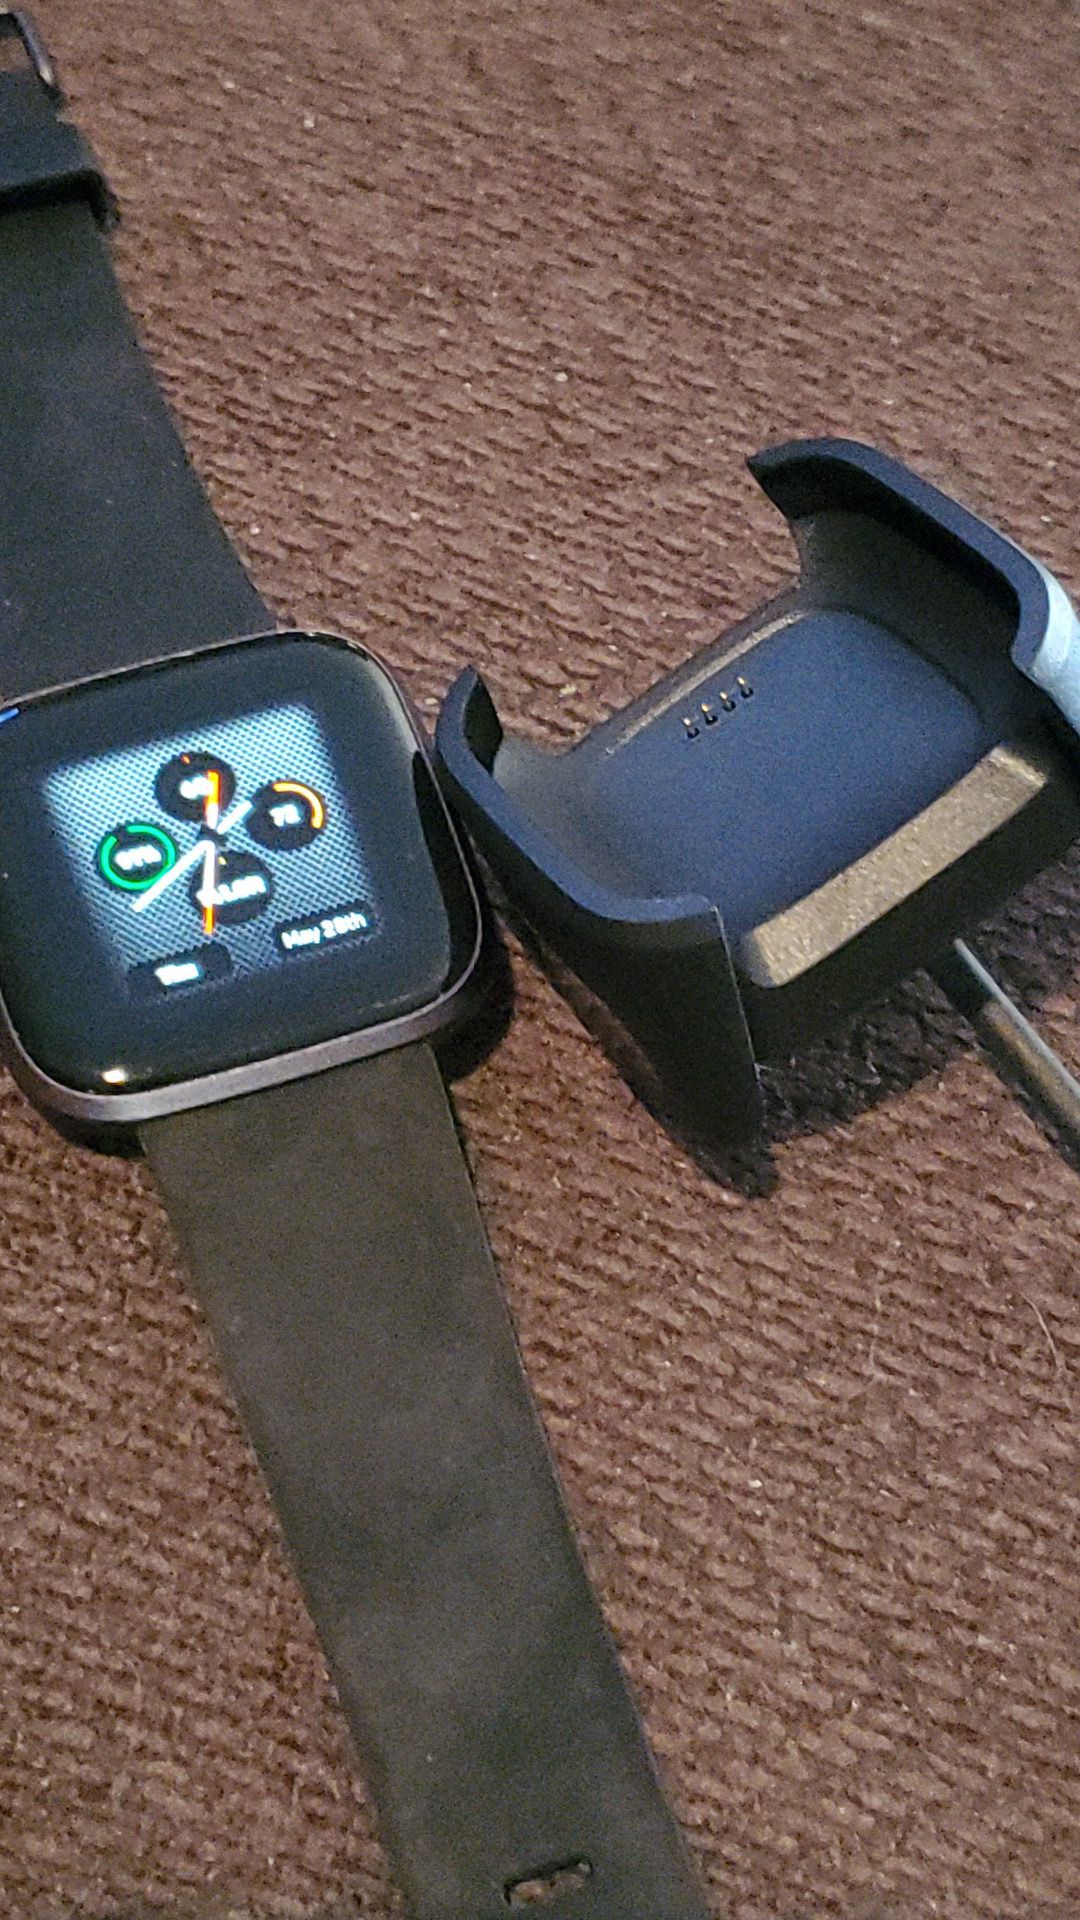 Fitbit Versa 2 fitness watch.